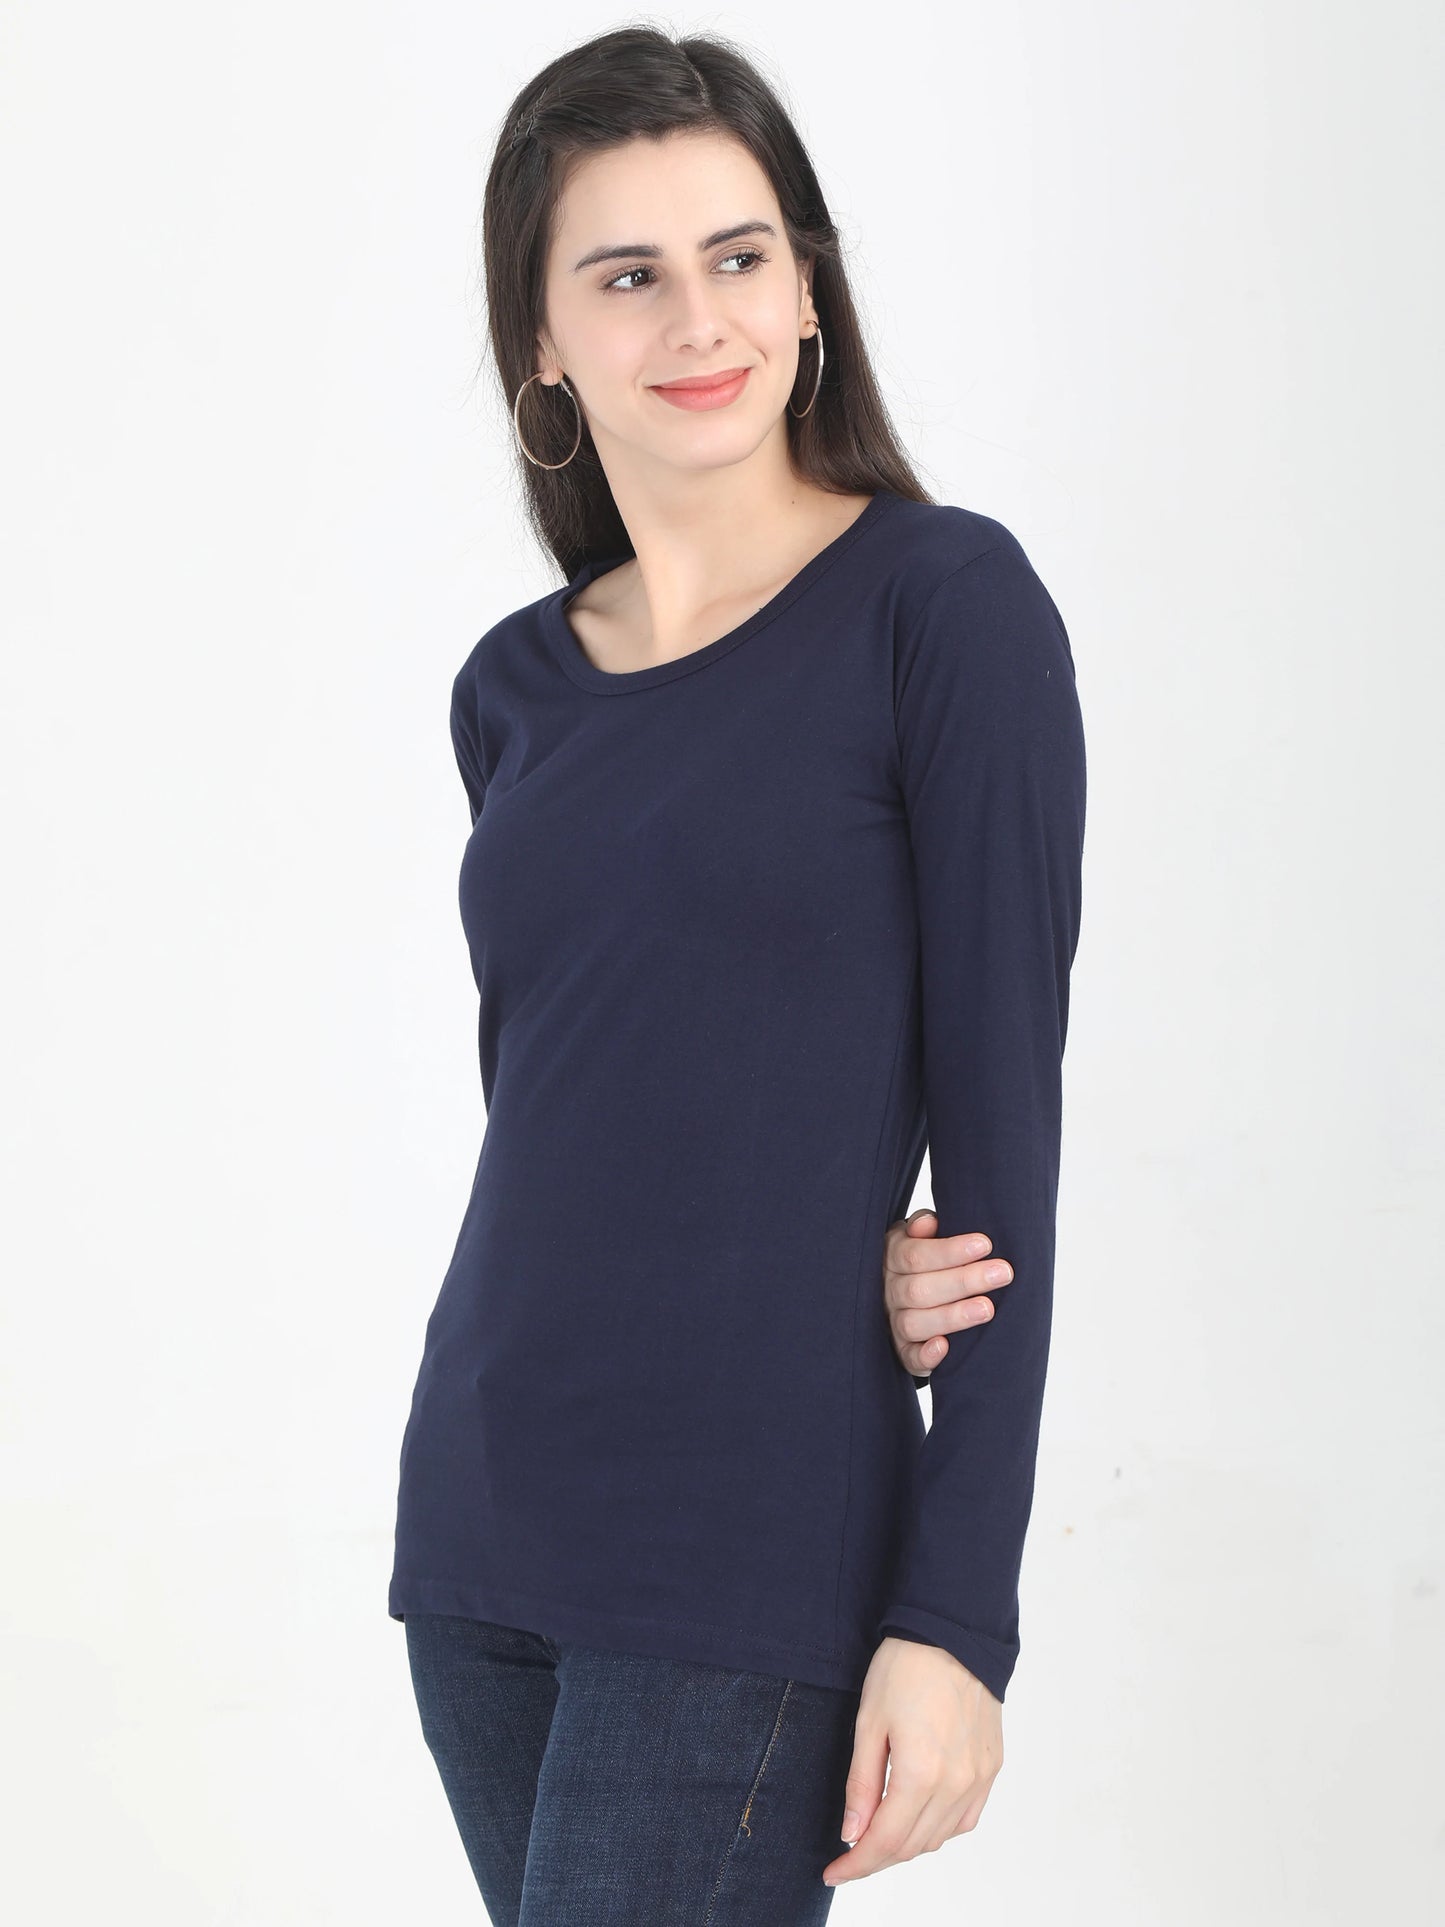 Women's Cotton Plain Round Neck Full Sleeve Navy Blue Color T-Shirt